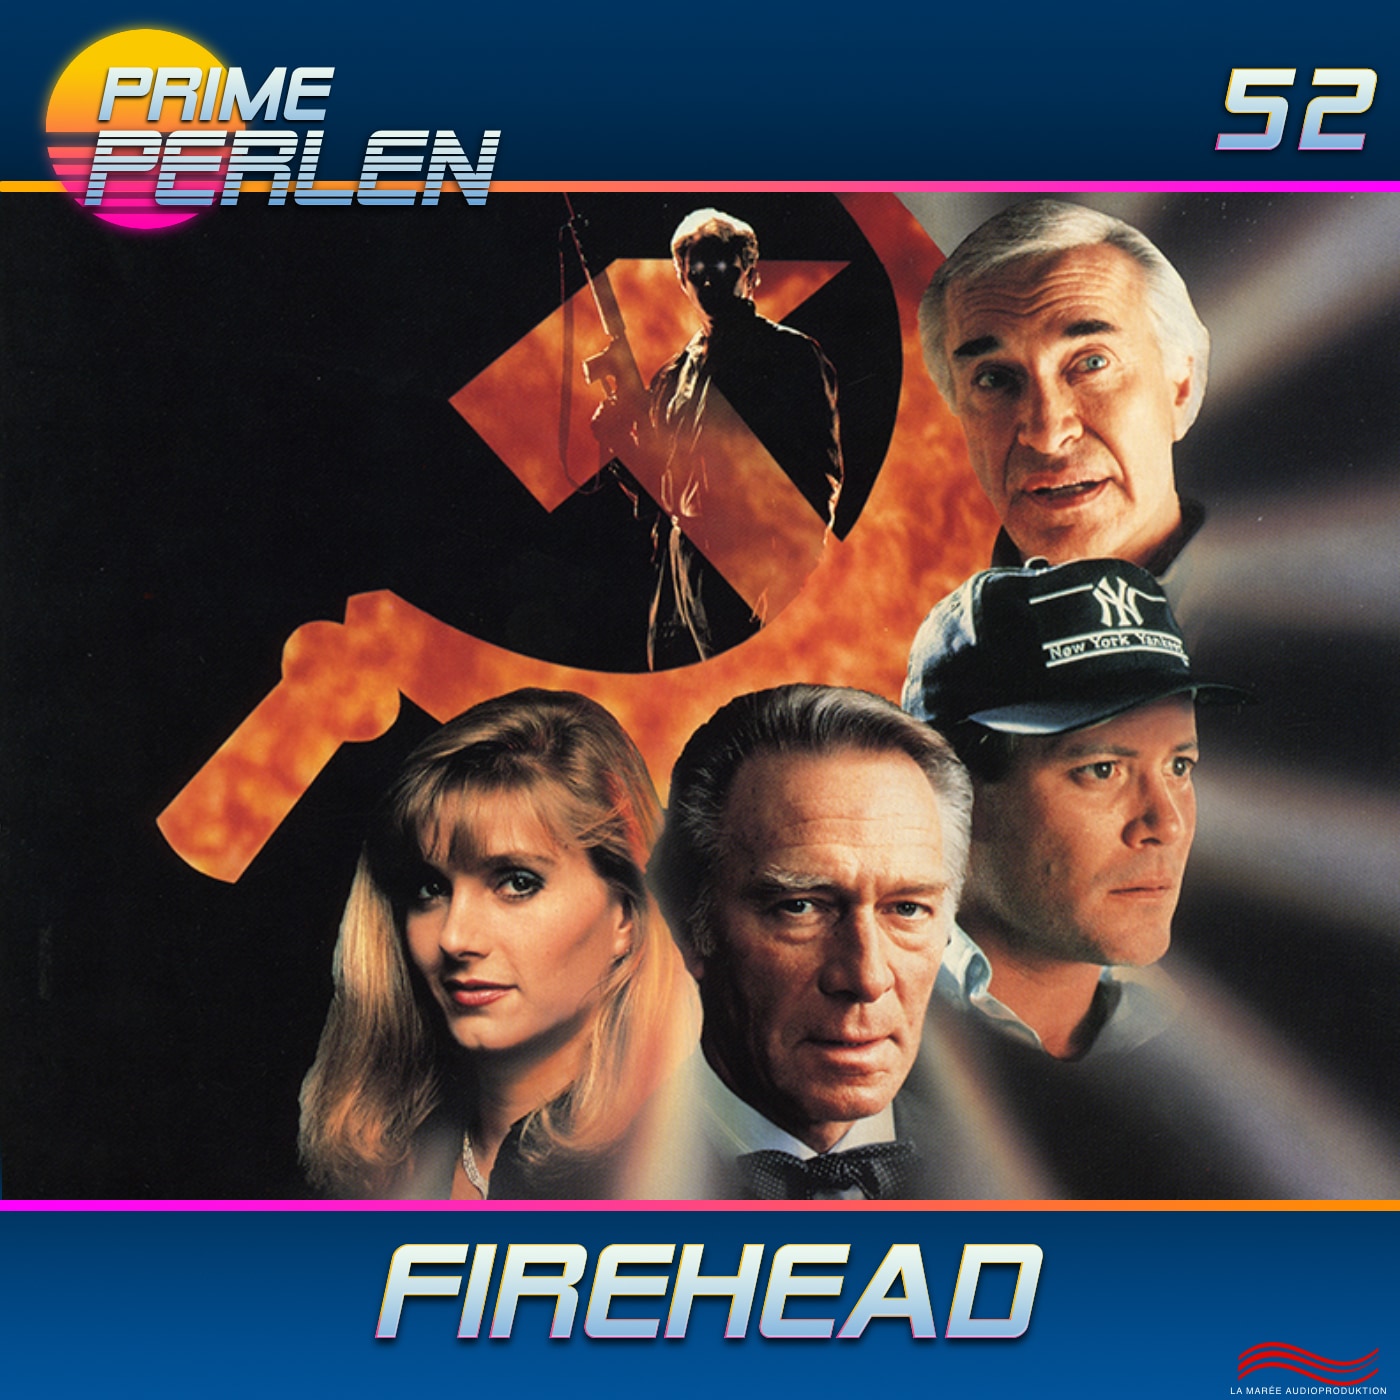 Prime Perlen #52 – Firehead